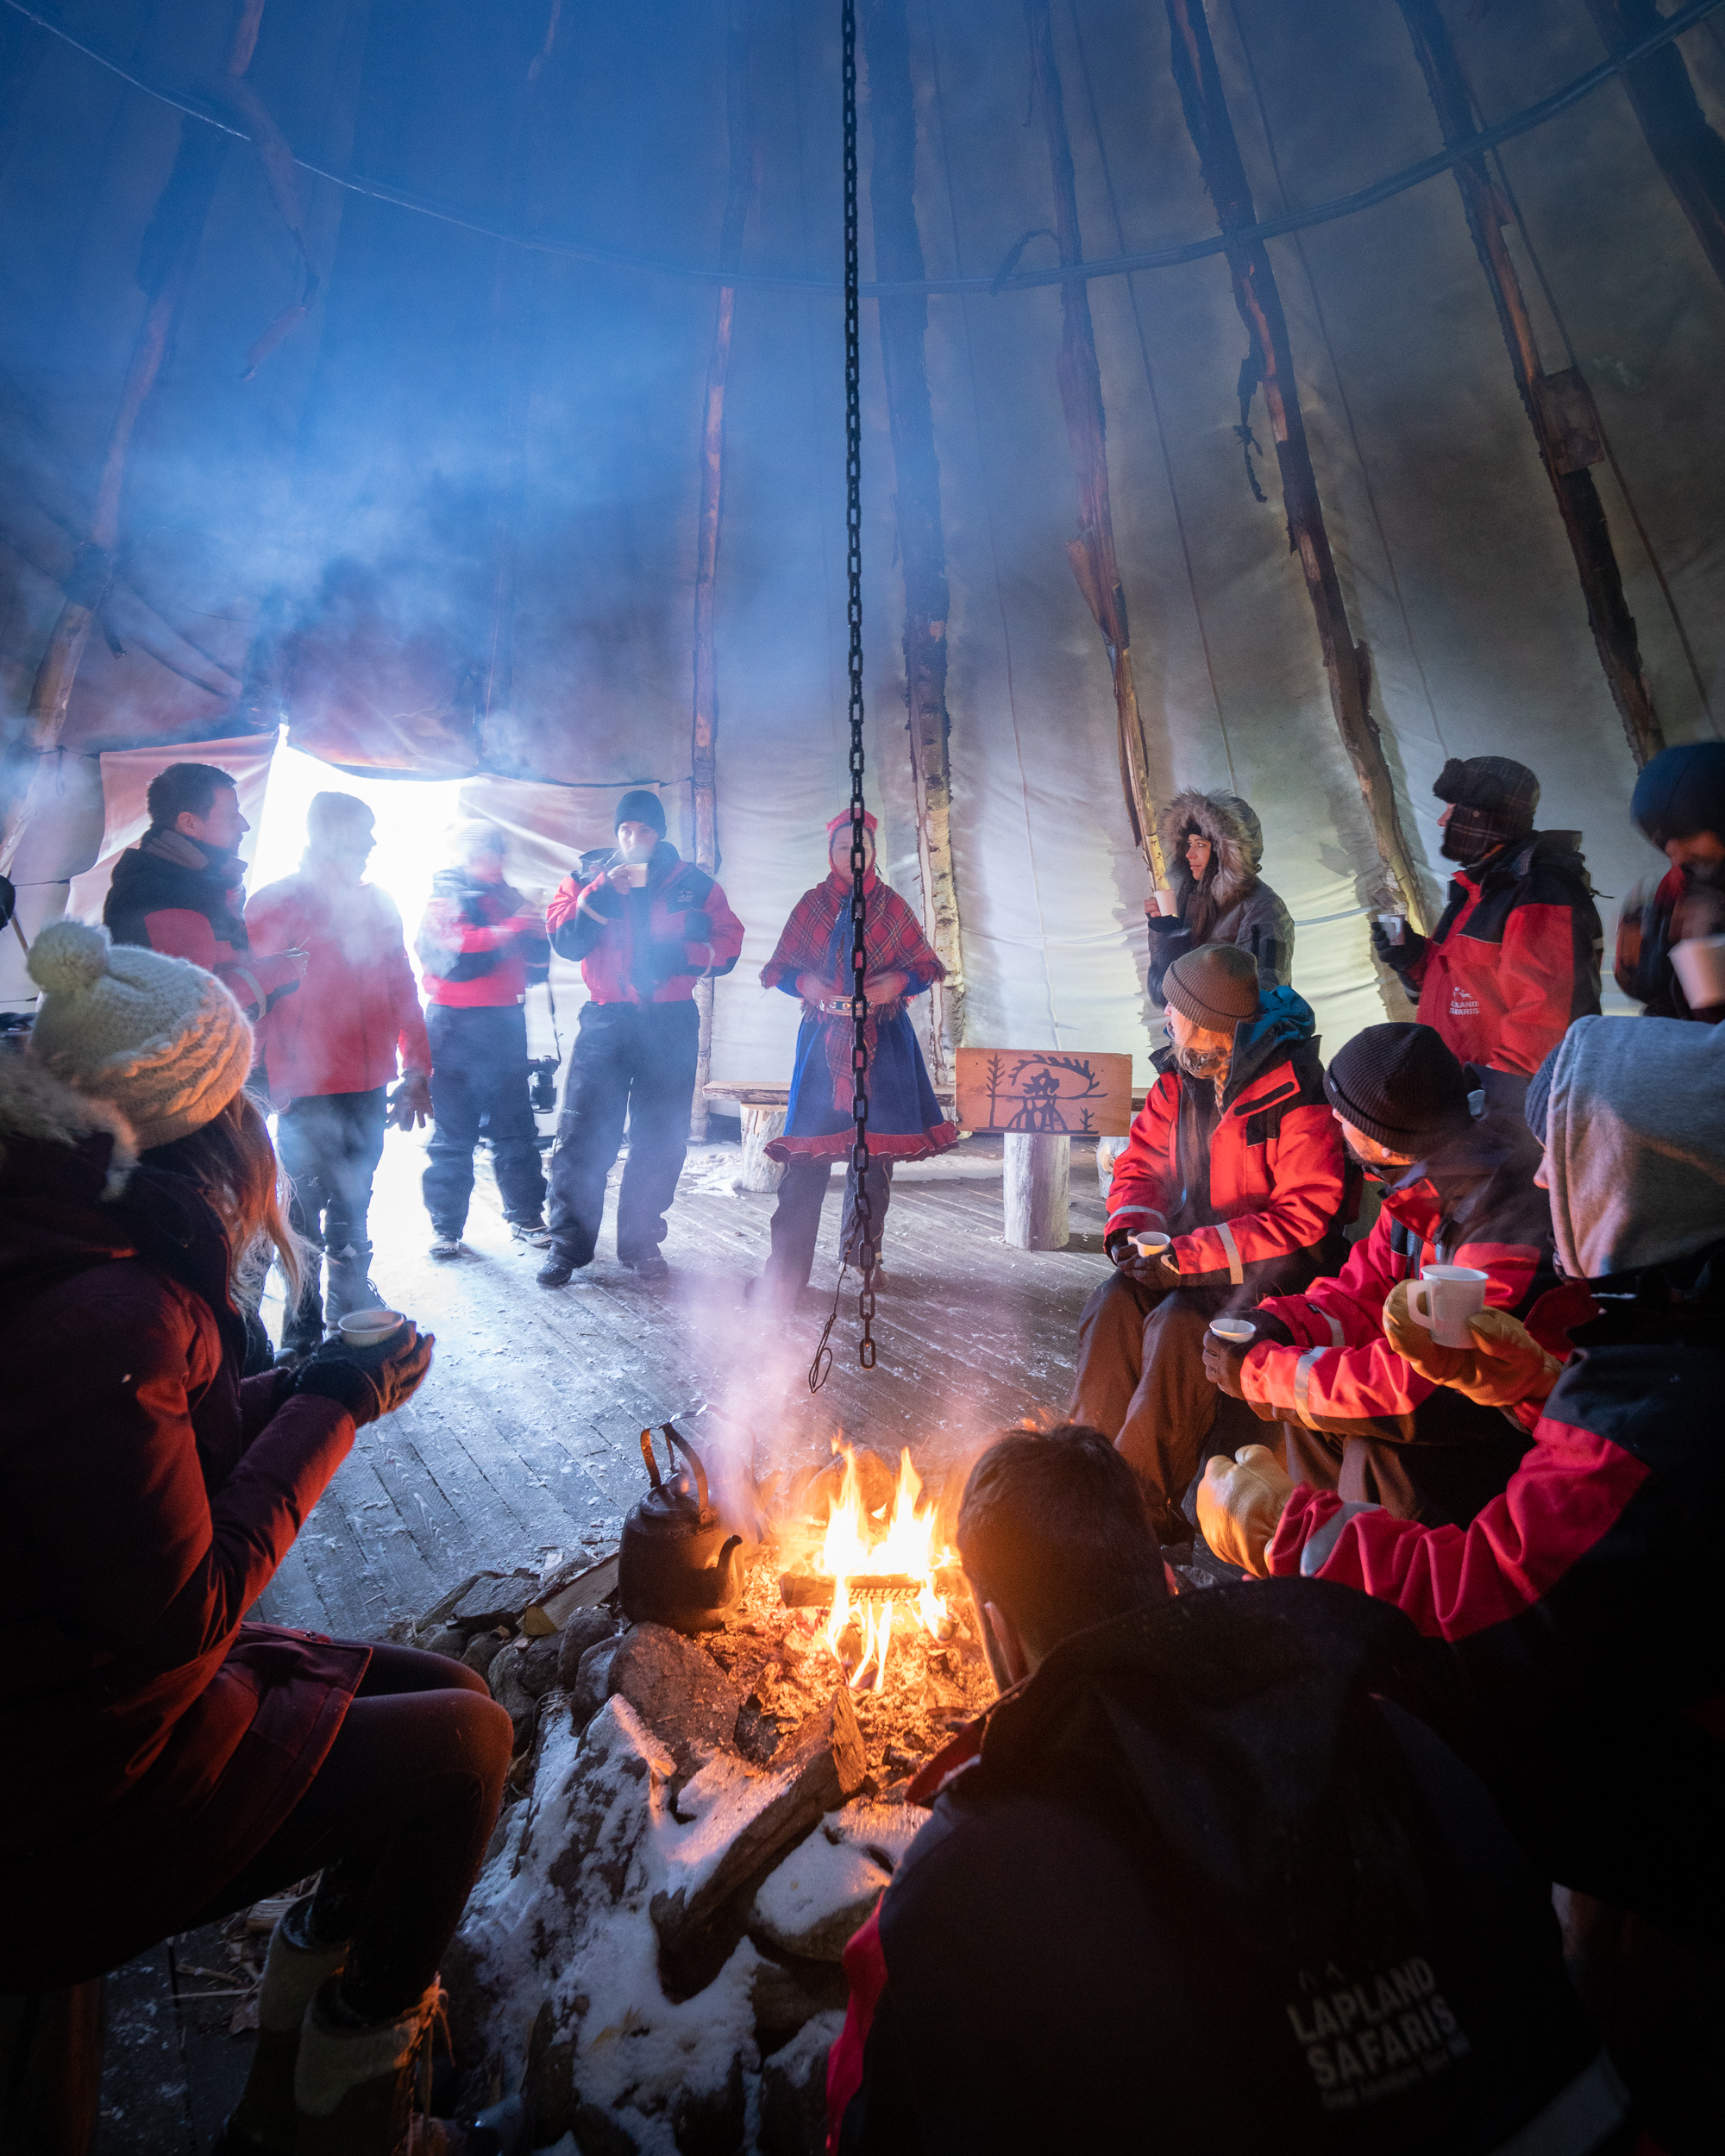 Enjoying tea around the fire with the Sami people.